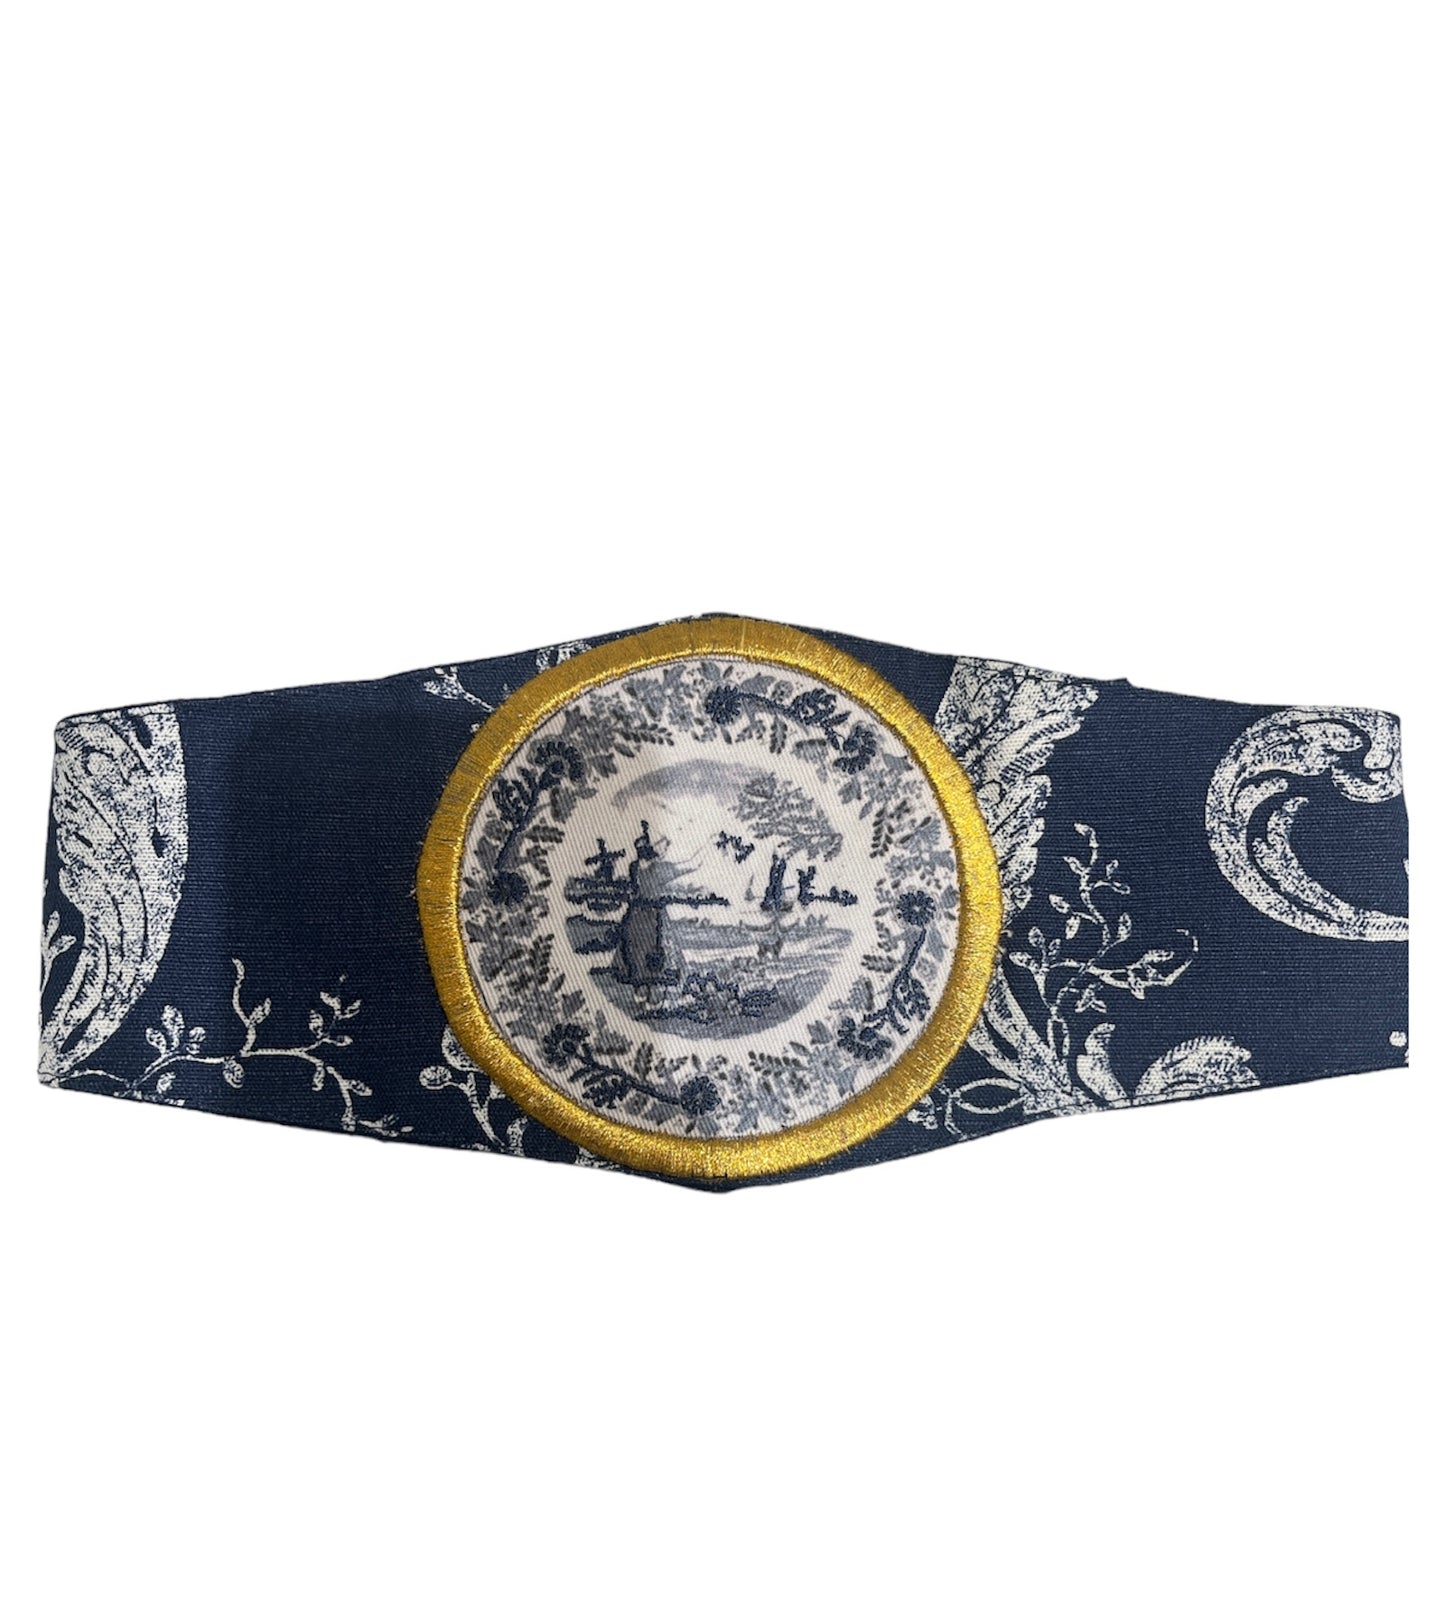 Delft Blue Inspired Belt